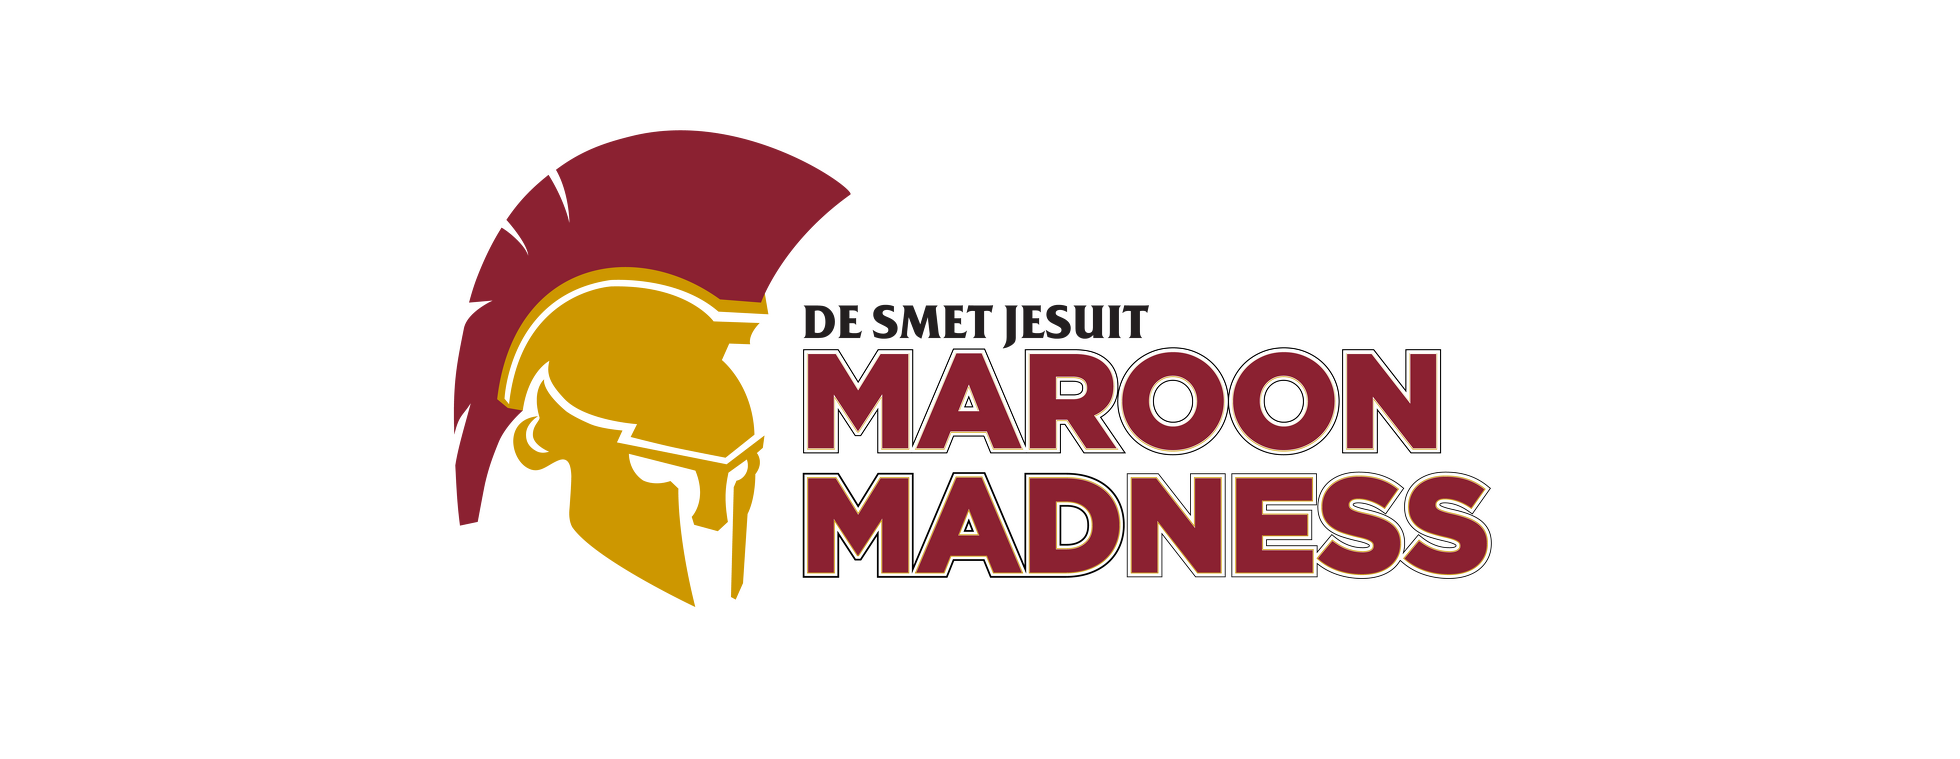 De Smet Jesuit Maroon Madness